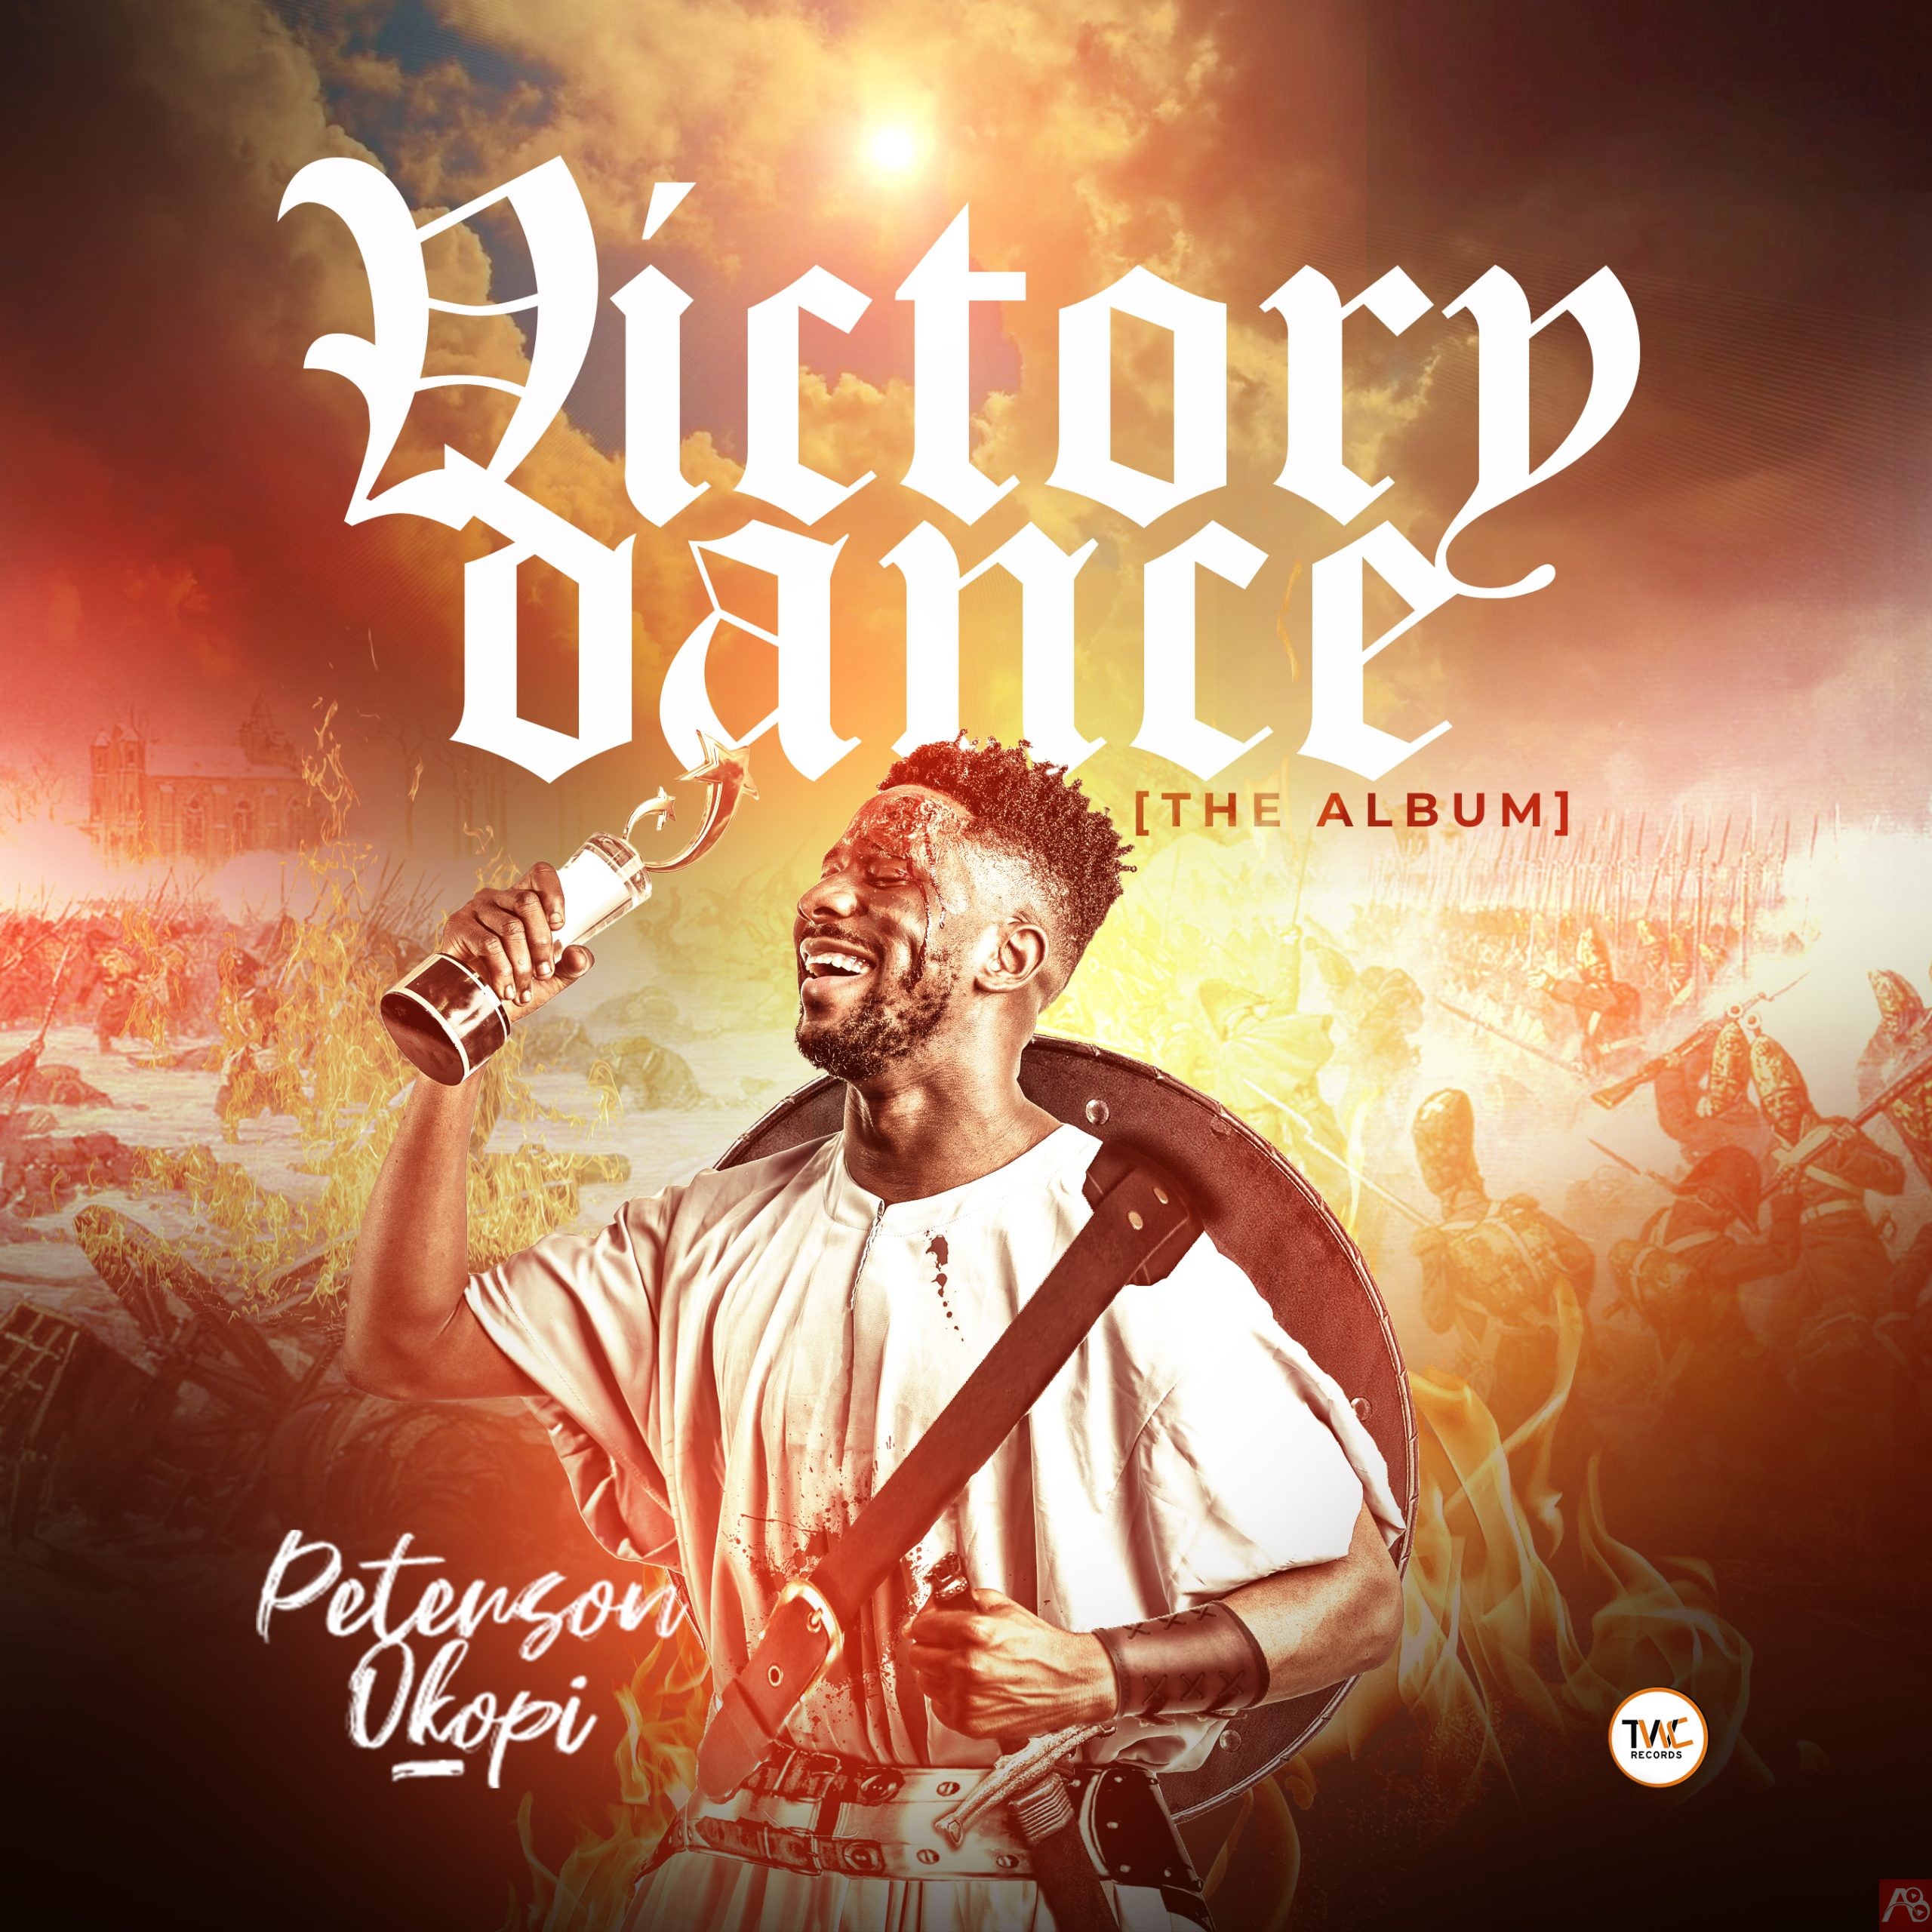 Peterson Okopi - Victory Dance (The Album)